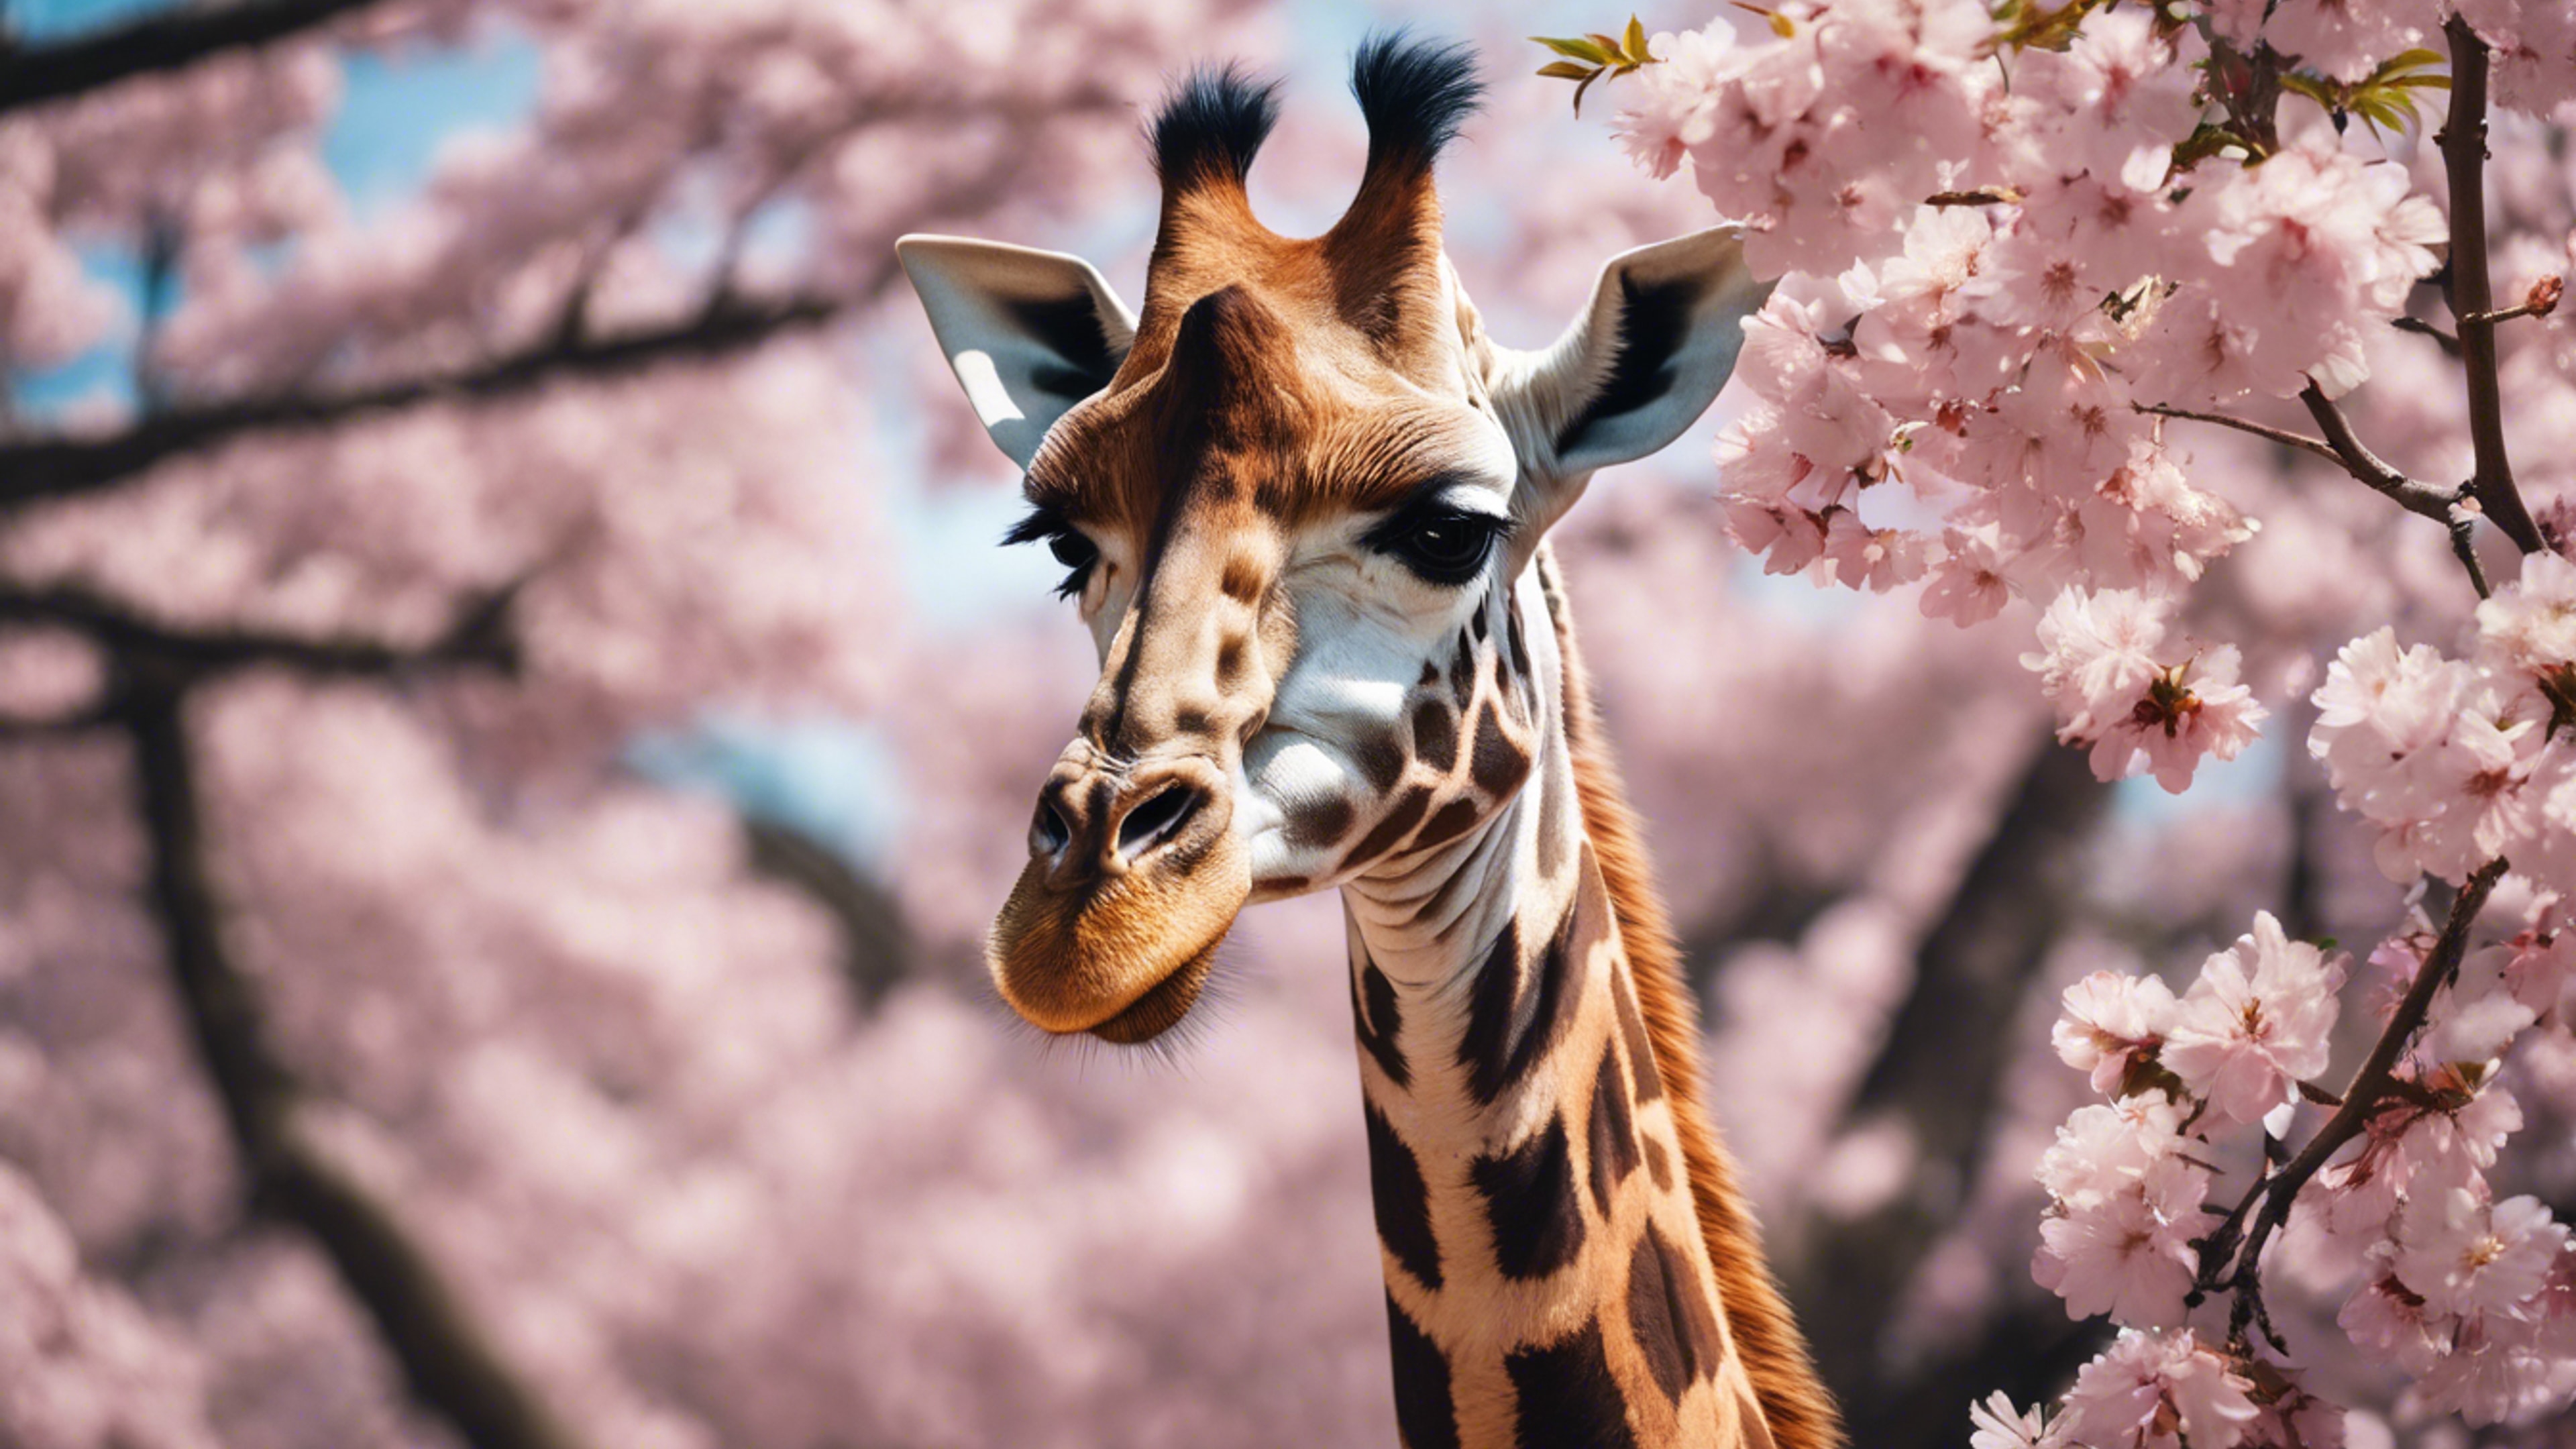 A giraffe hiding playfully behind a cherry blossom tree in full bloom.壁紙[1212acafafba4b4d89bd]